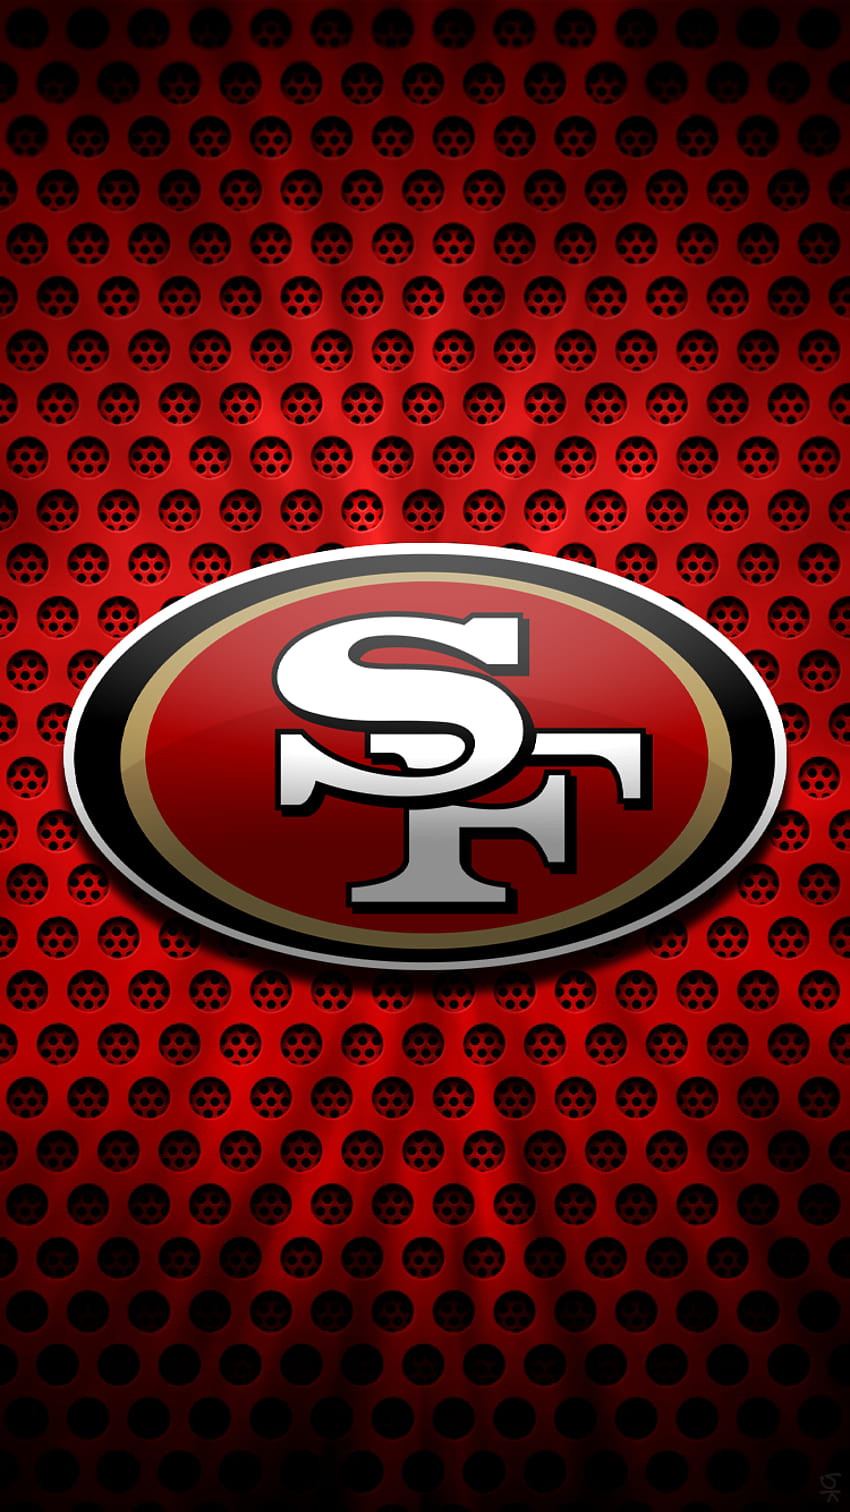 San Francisco 49ers (Halaman 1), San Francisco 49ers Logo wallpaper ponsel HD